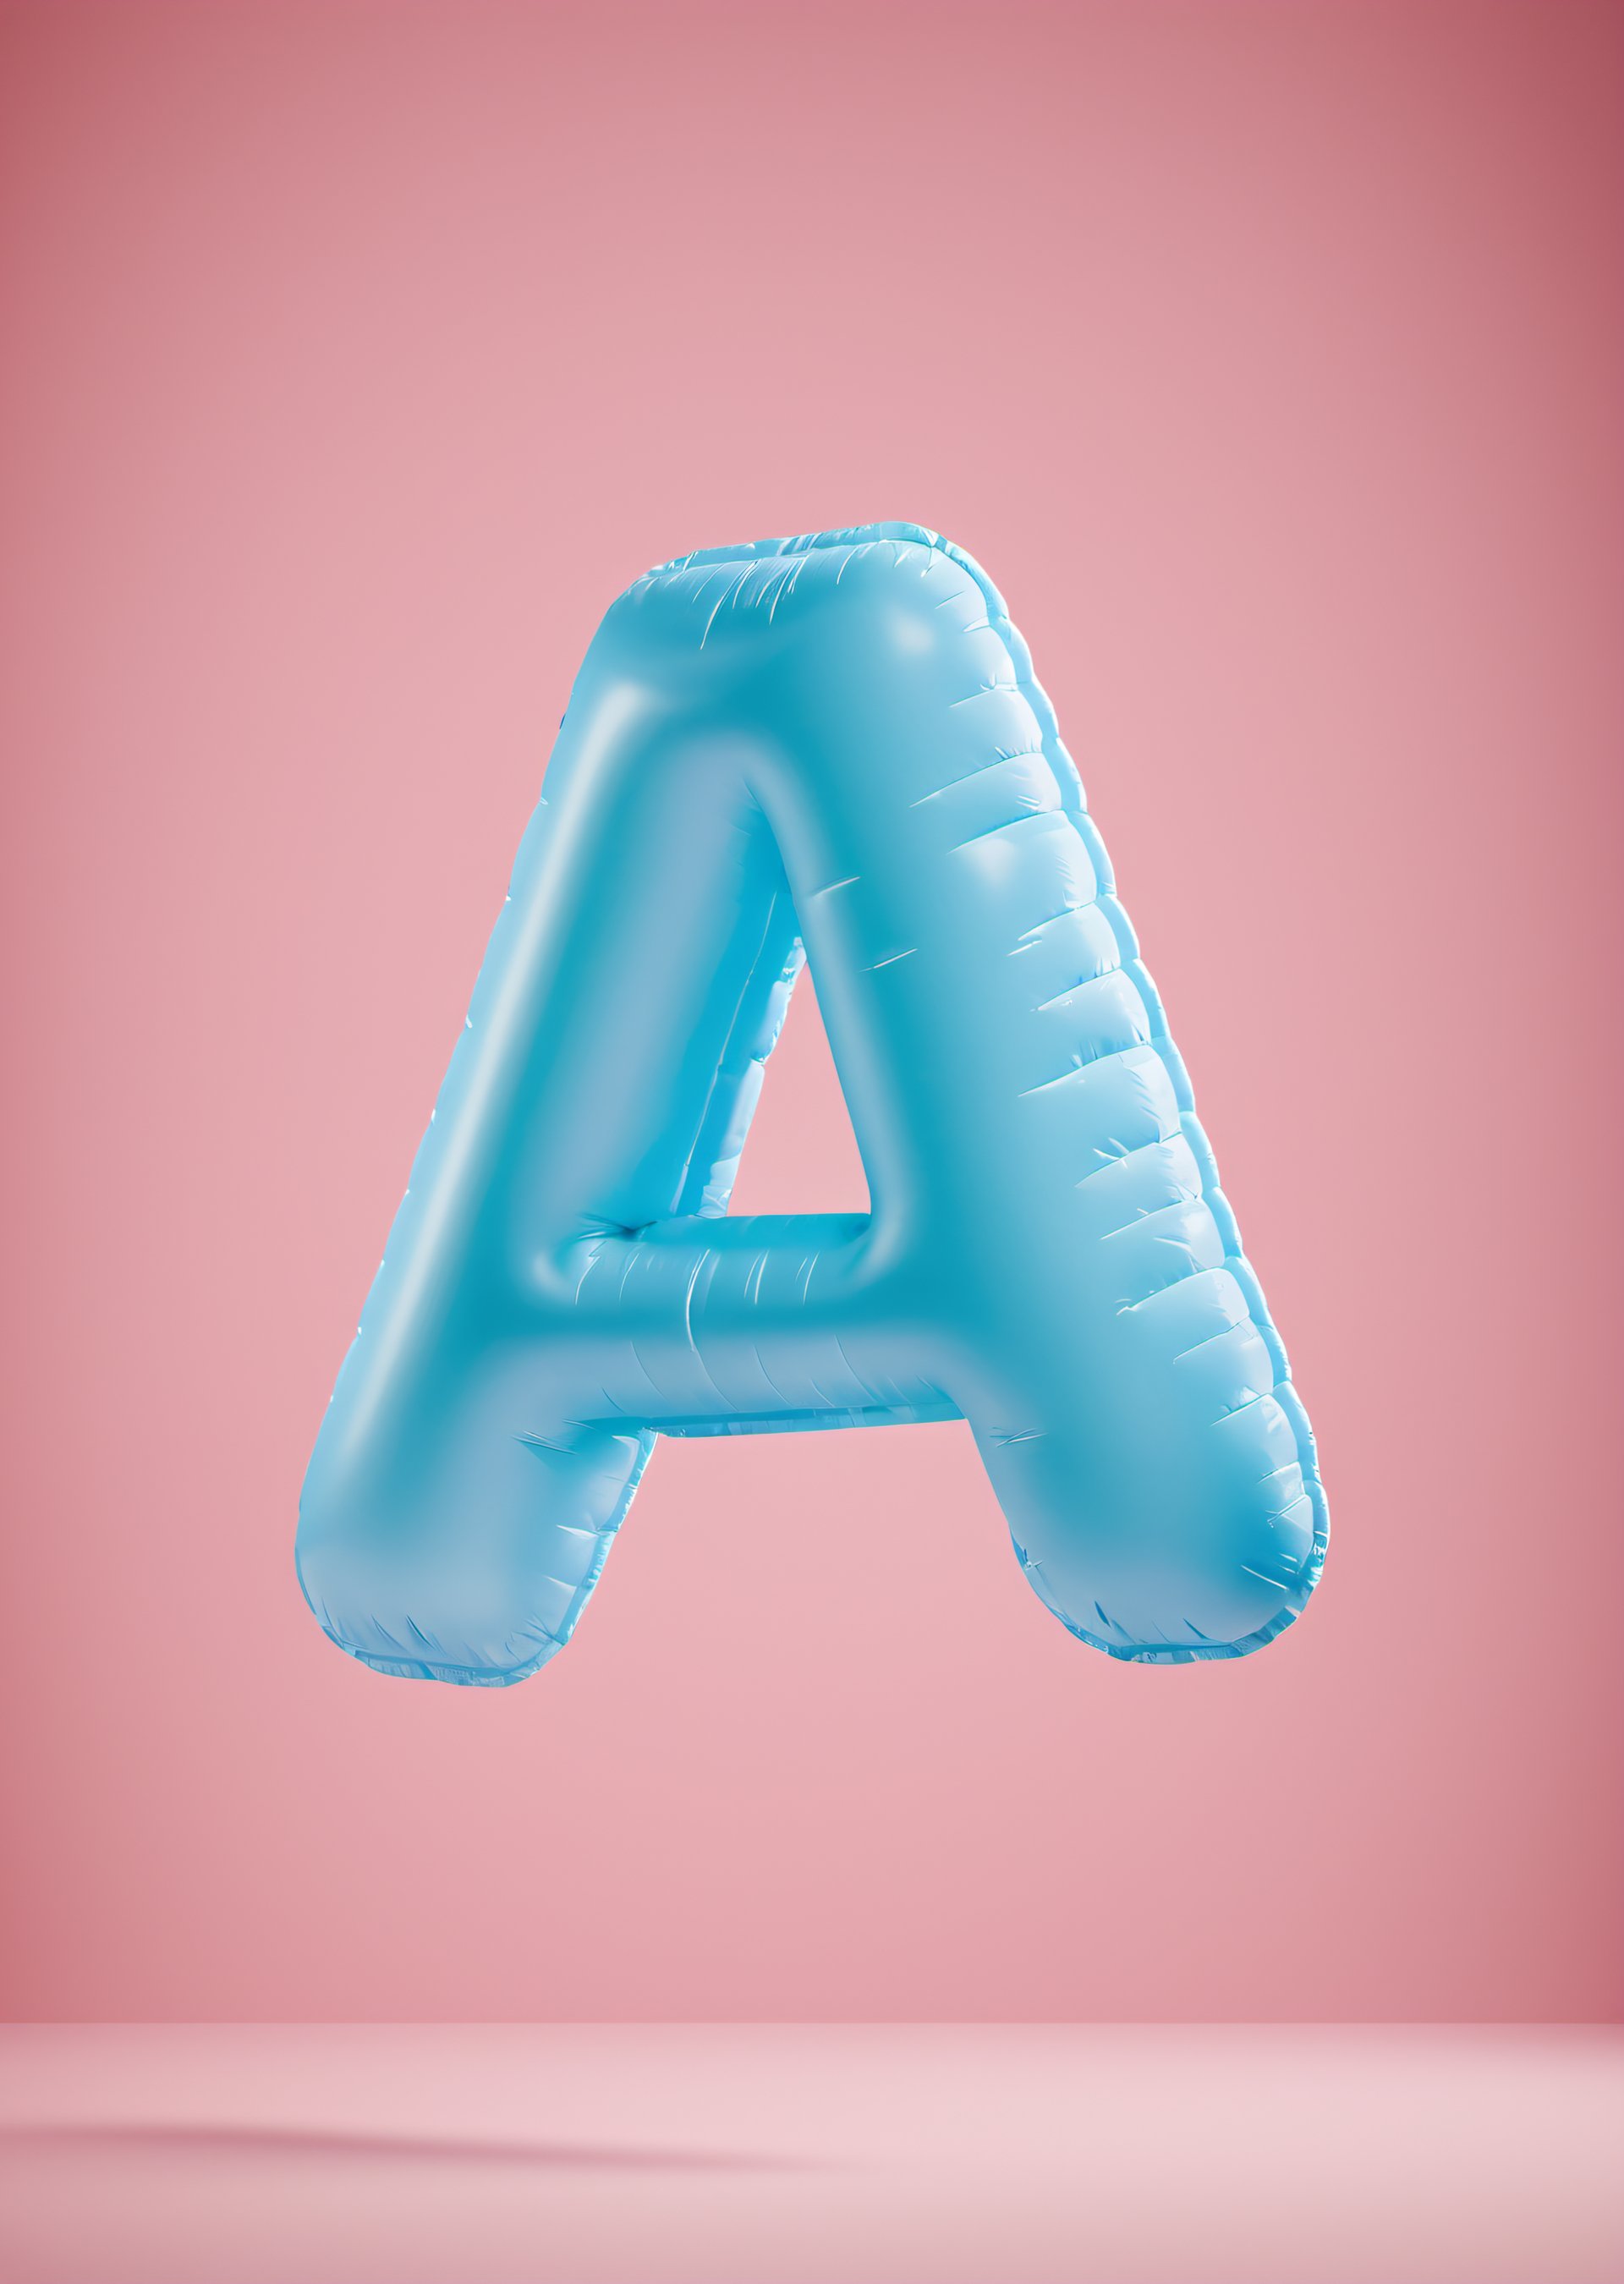 inflatable 3d alphabet A